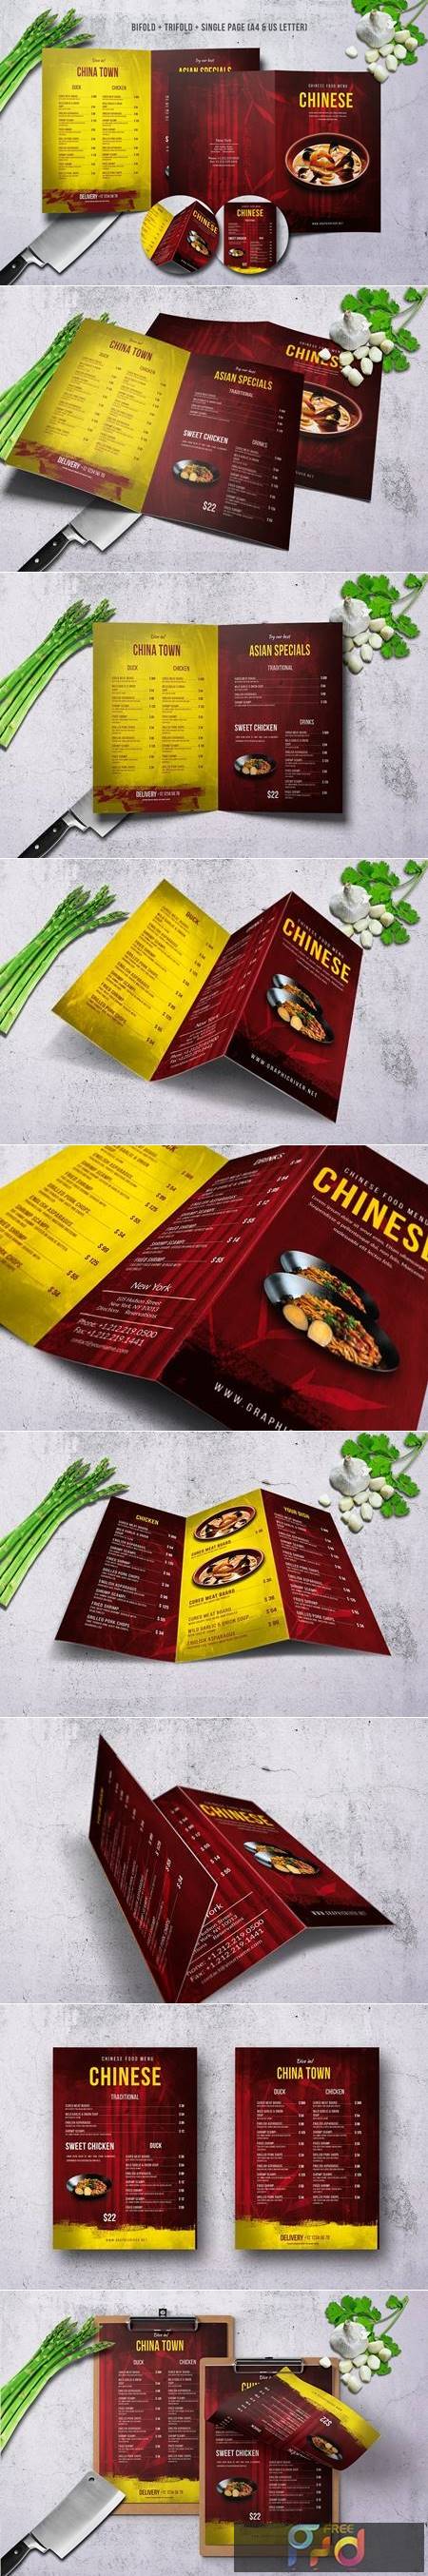 Chinese A4 & US Letter Food Menu Bundle VUG6RG 1